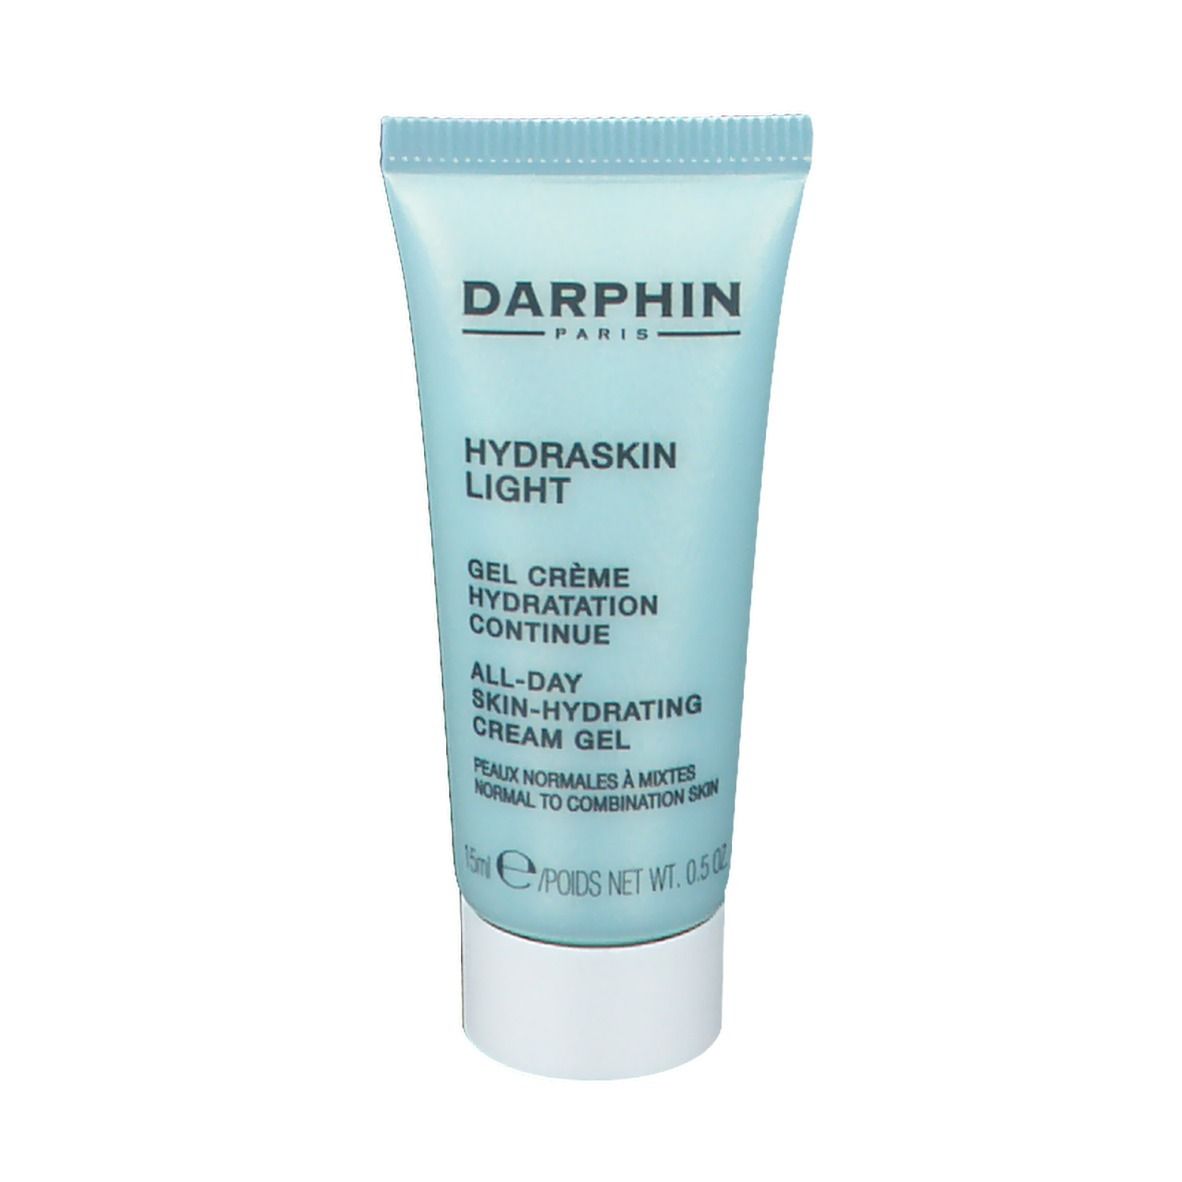 Darphin Hydraskin Light Gel Crème Hydratation Continue